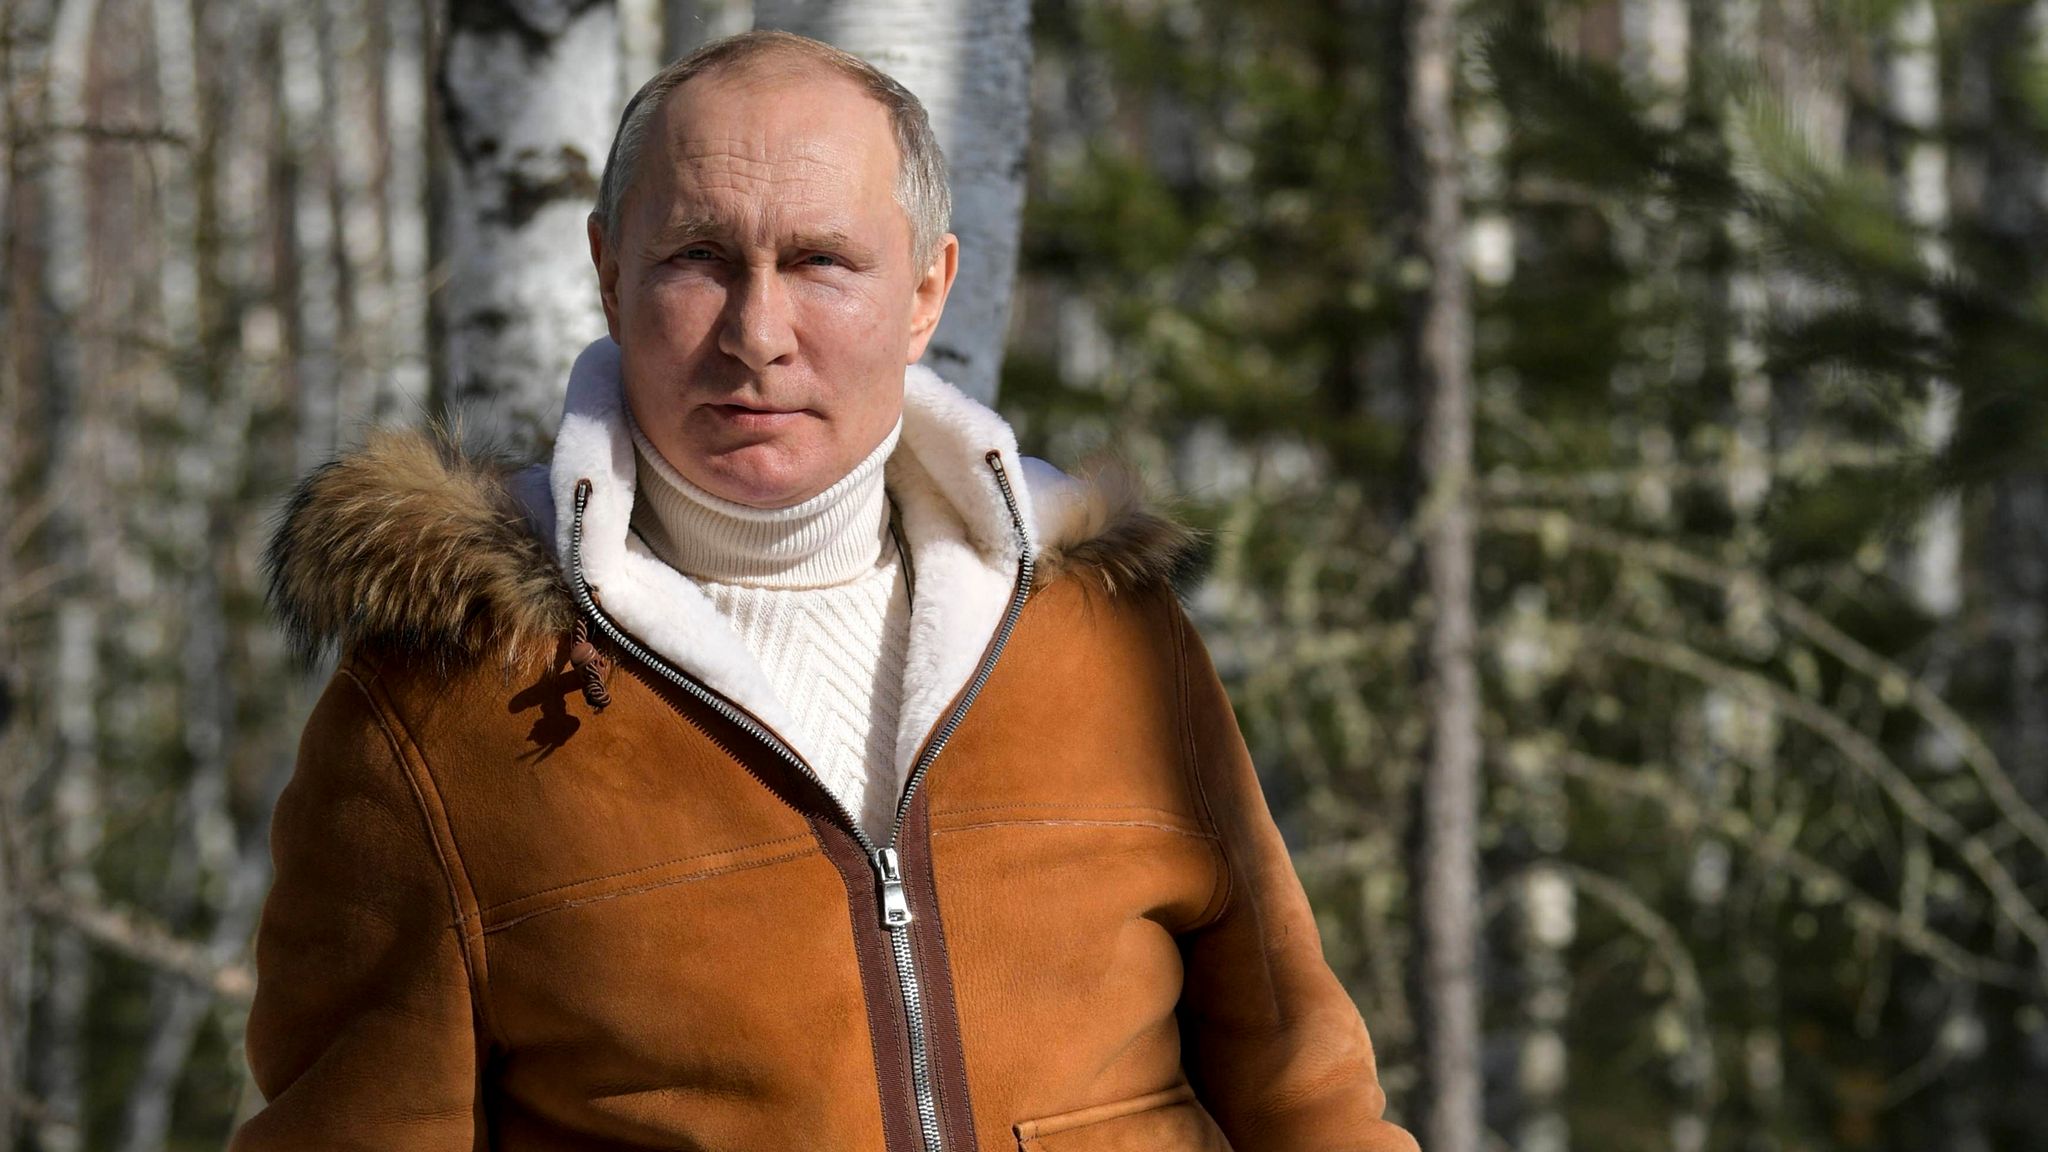 Putins Coat